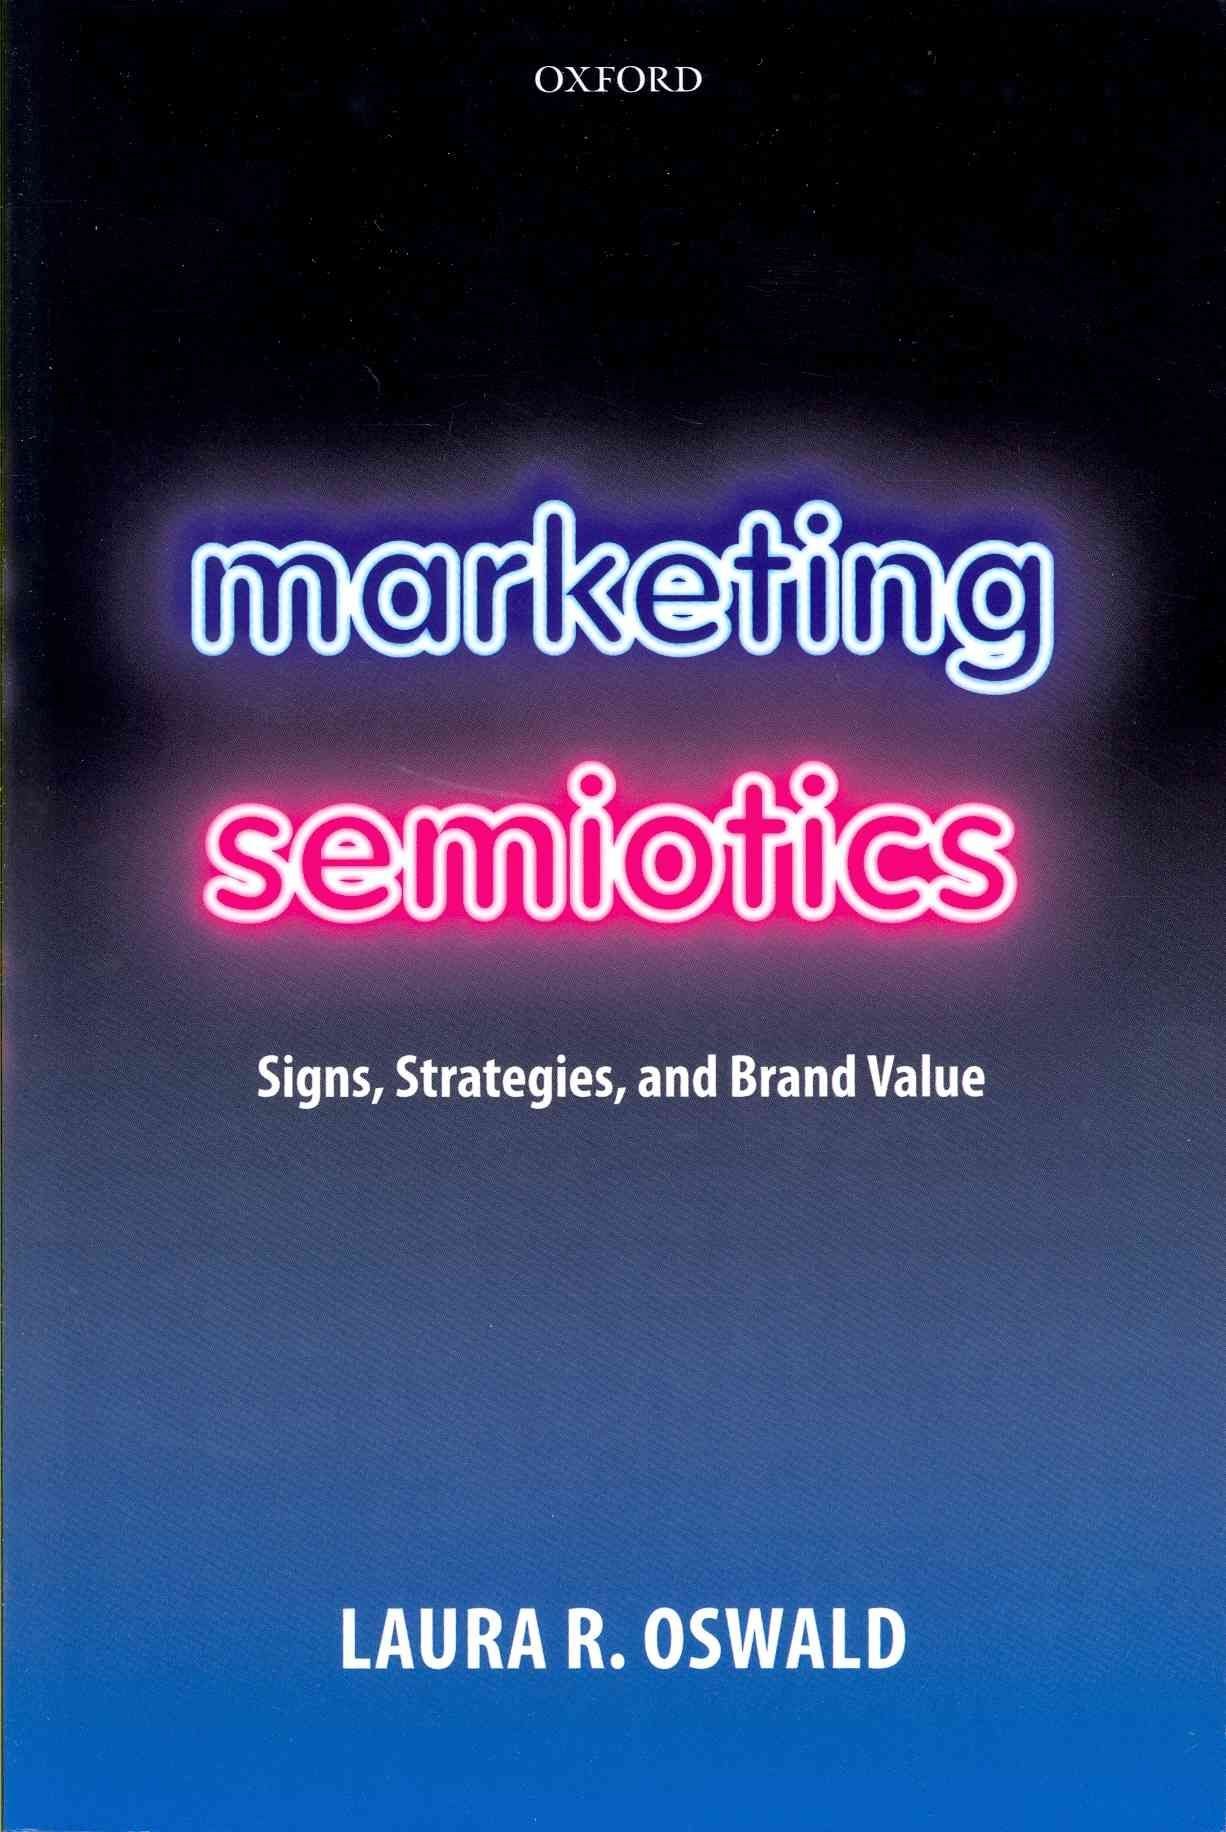 Marketing Semiotics